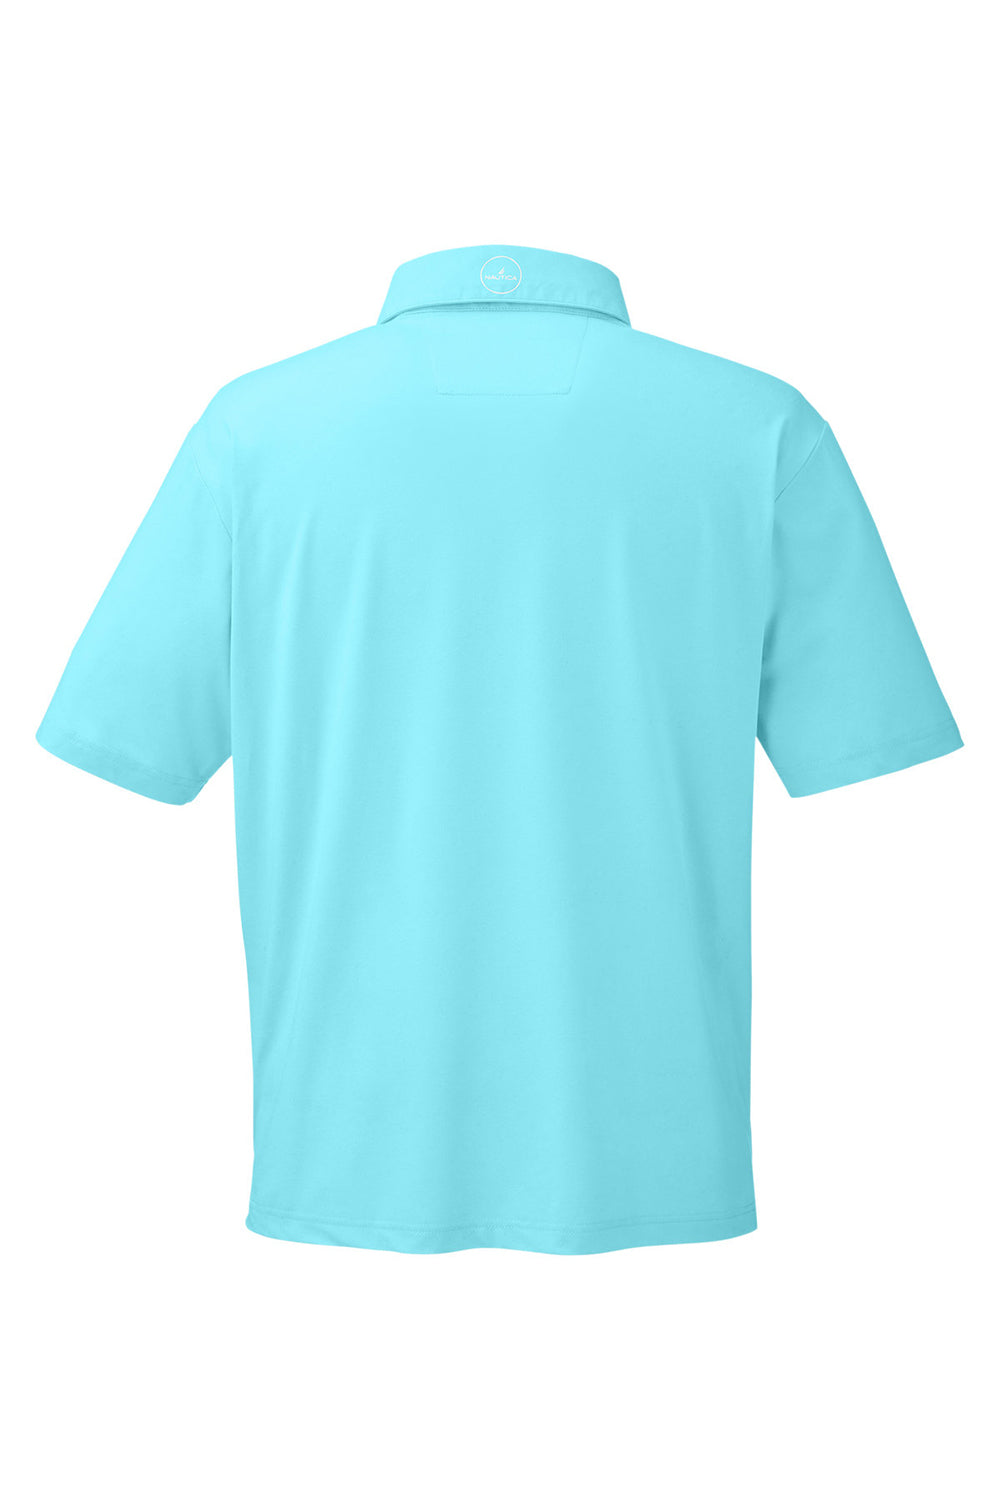 Nautica N17922 Mens Saltwater Short Sleeve Polo Shirt Sea Mist Blue Flat Back